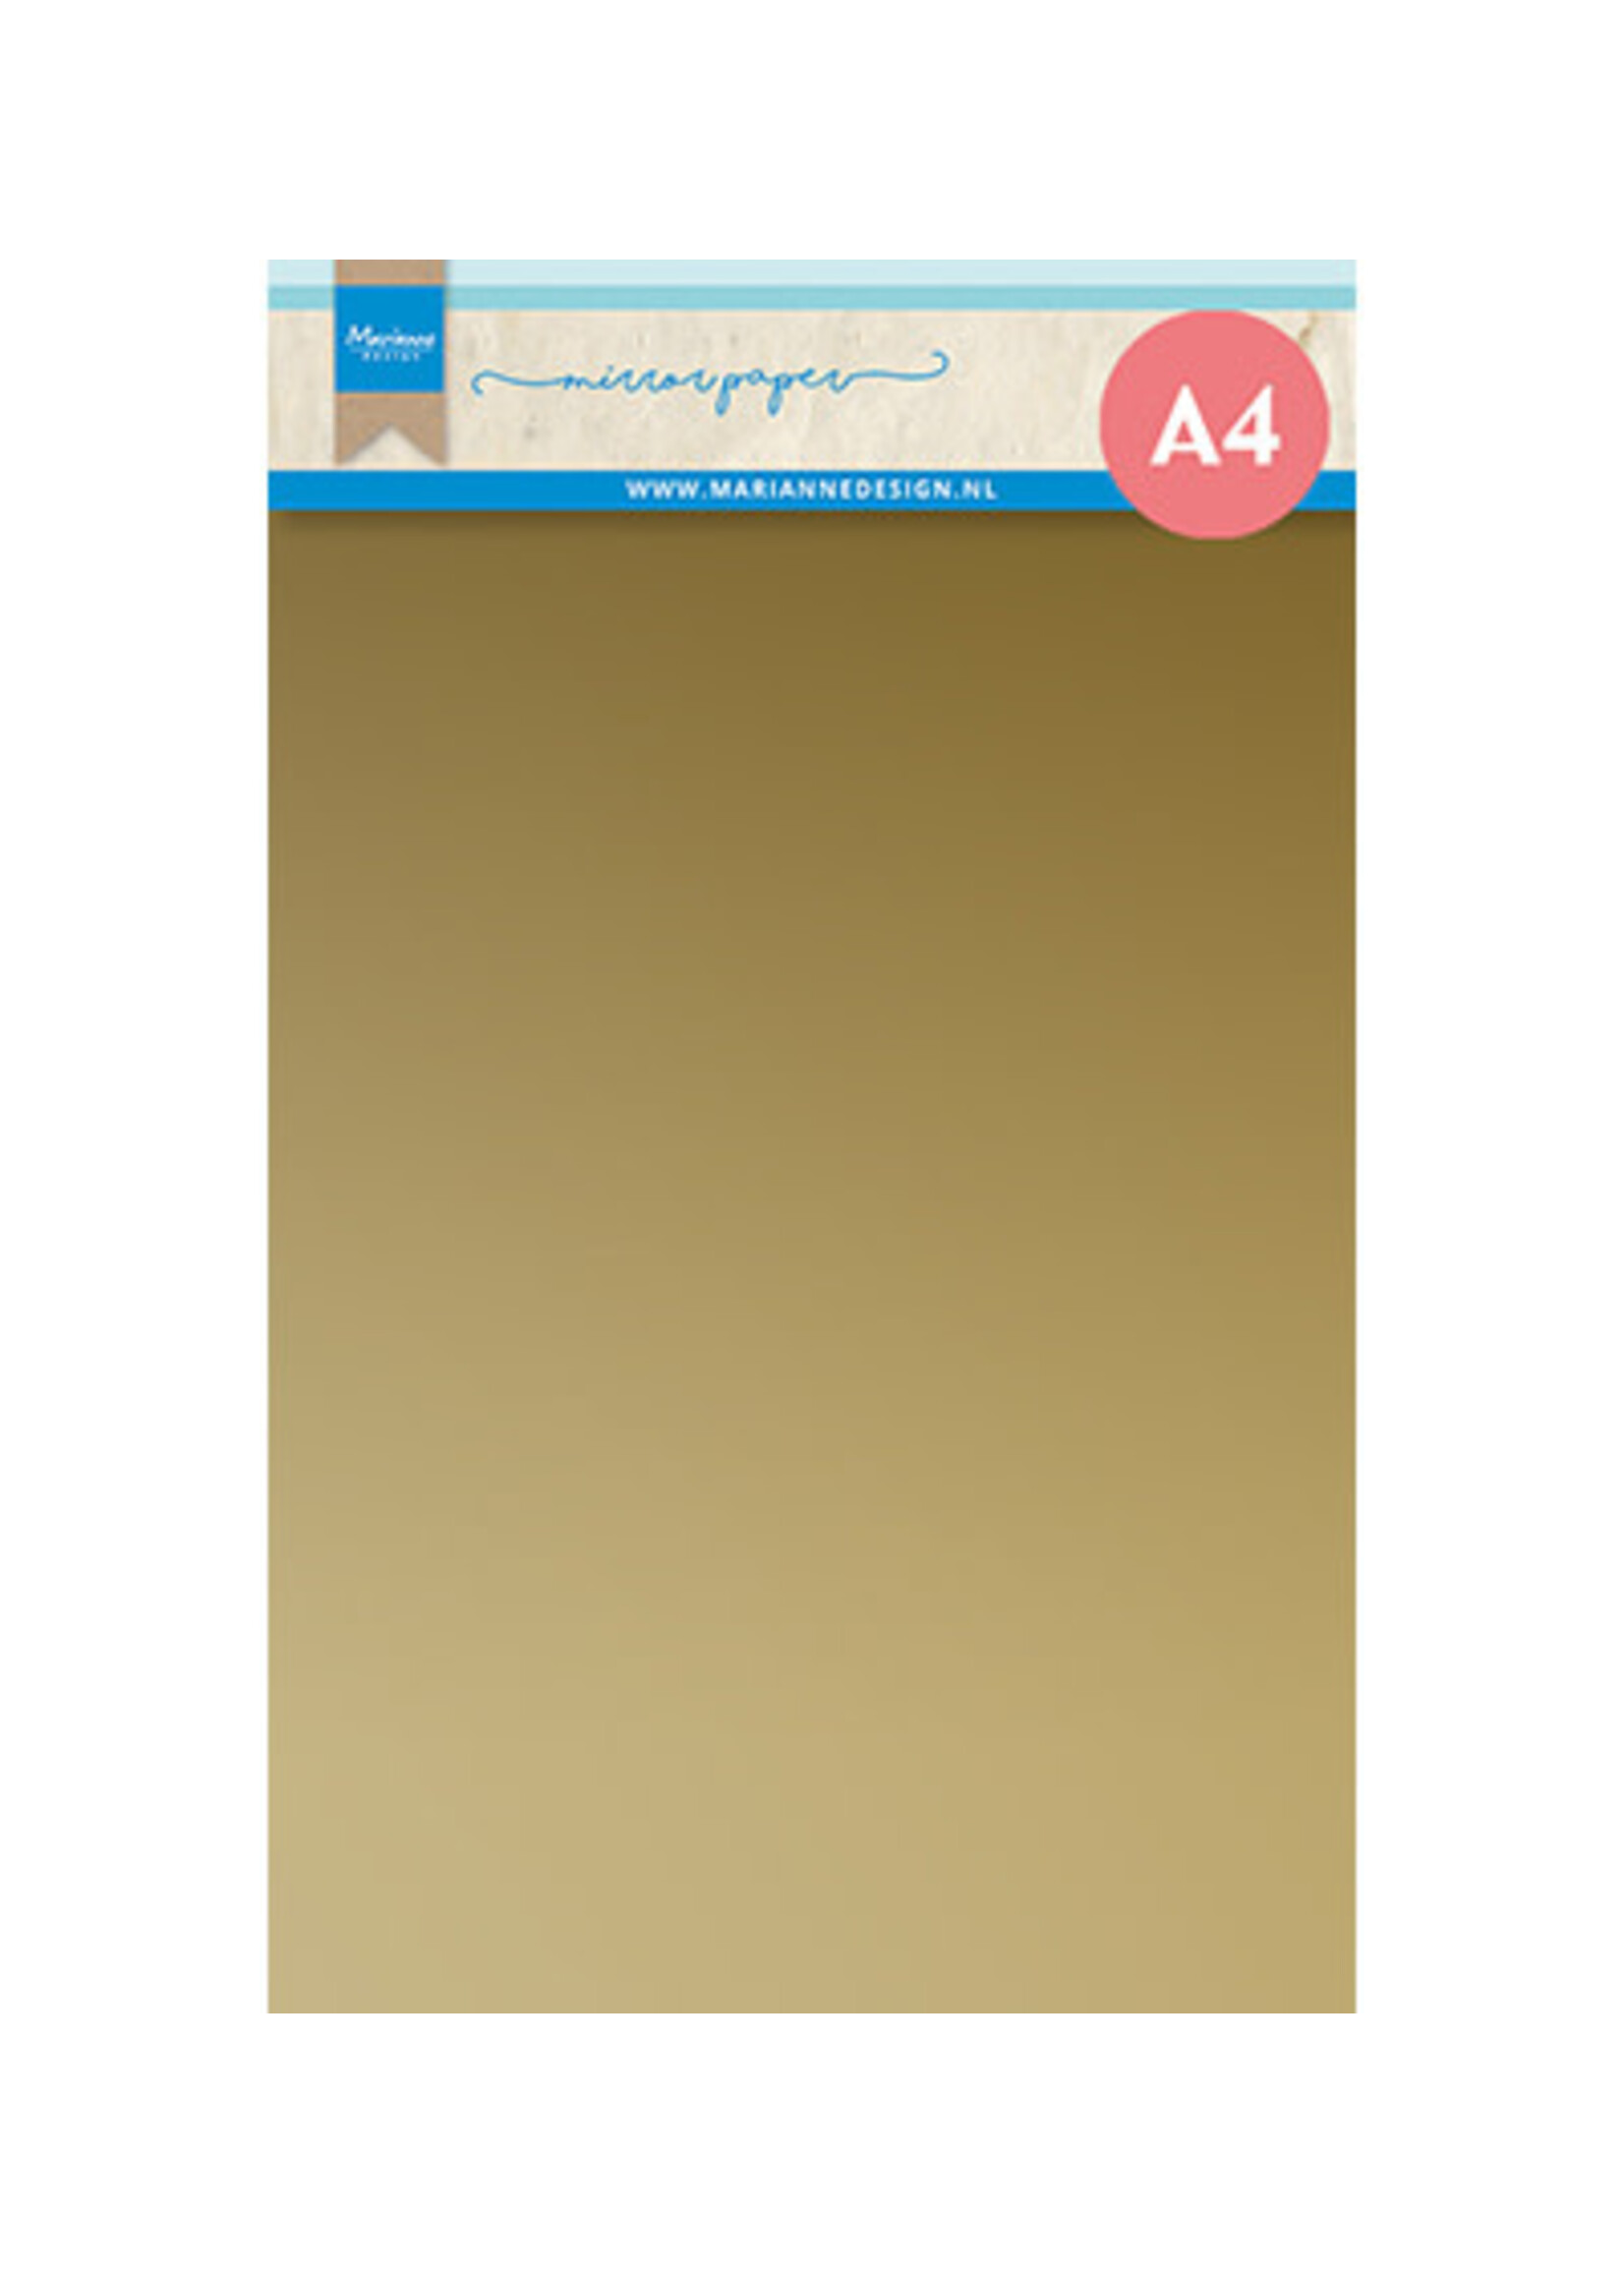 CA3177 - Mirror paper, Gold